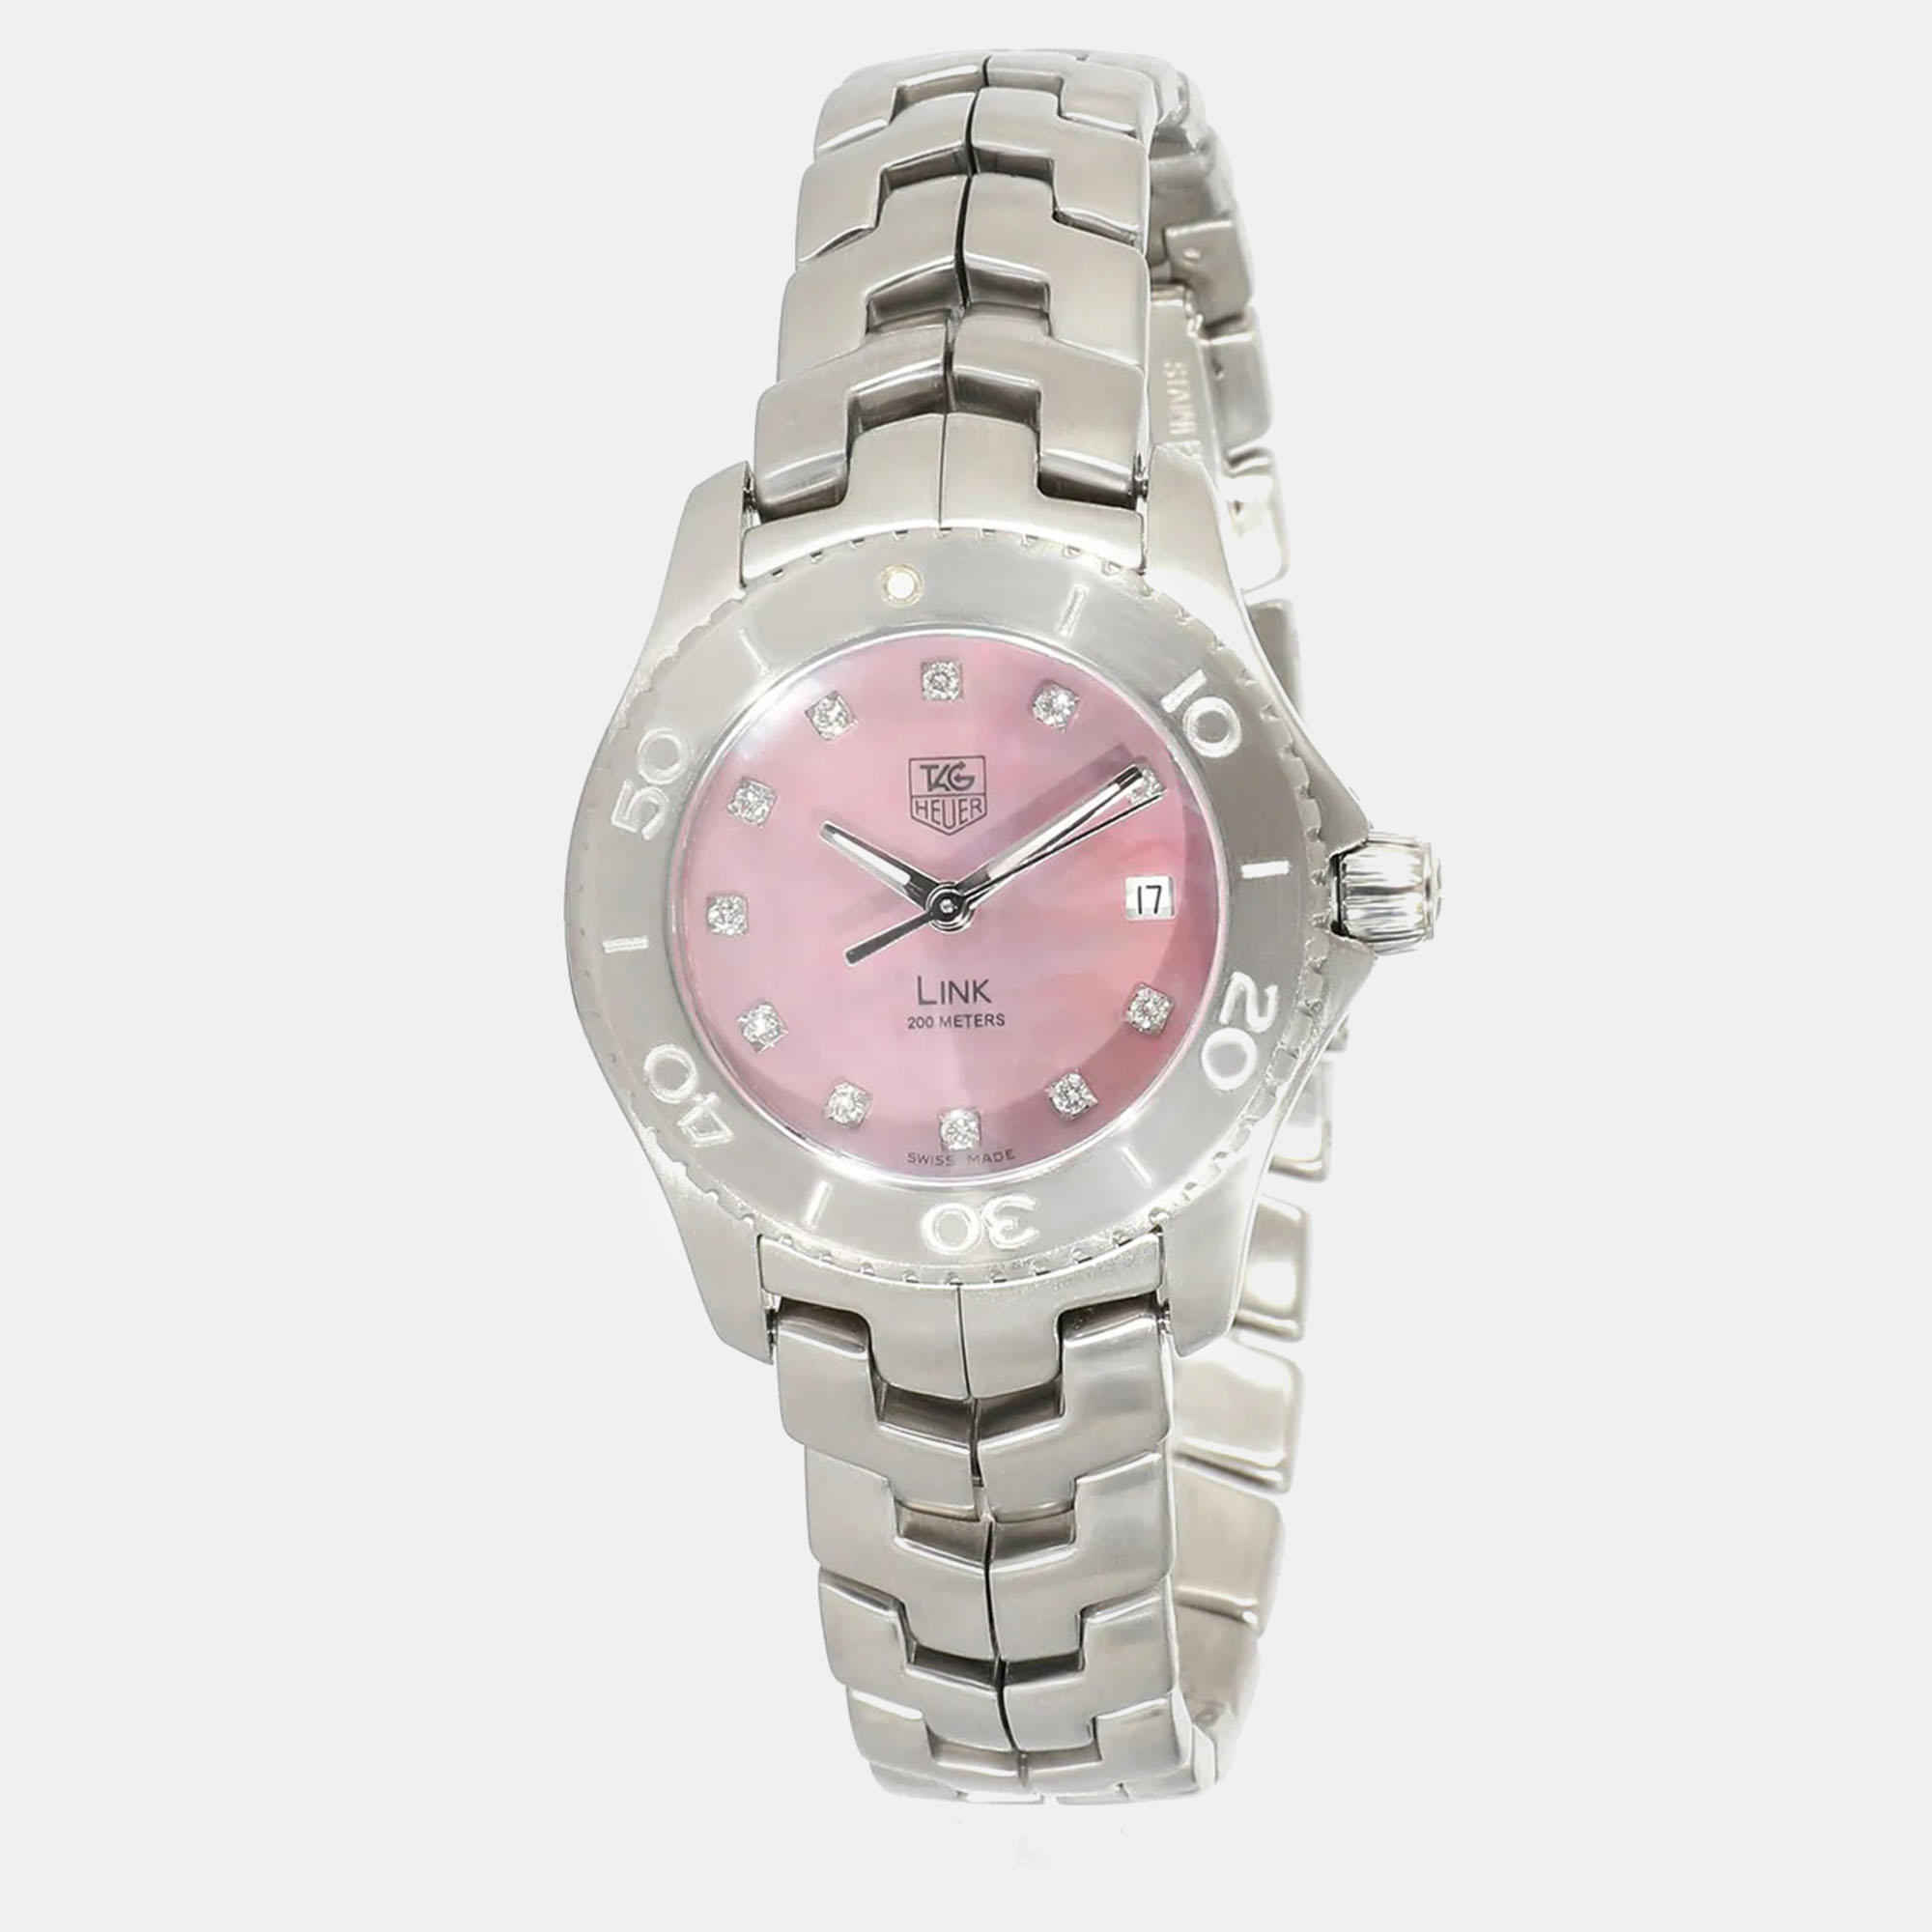 Tag heuer pink stainless steel diamond link wj131c.ba0573 quartz women's wristwatch 27 mm